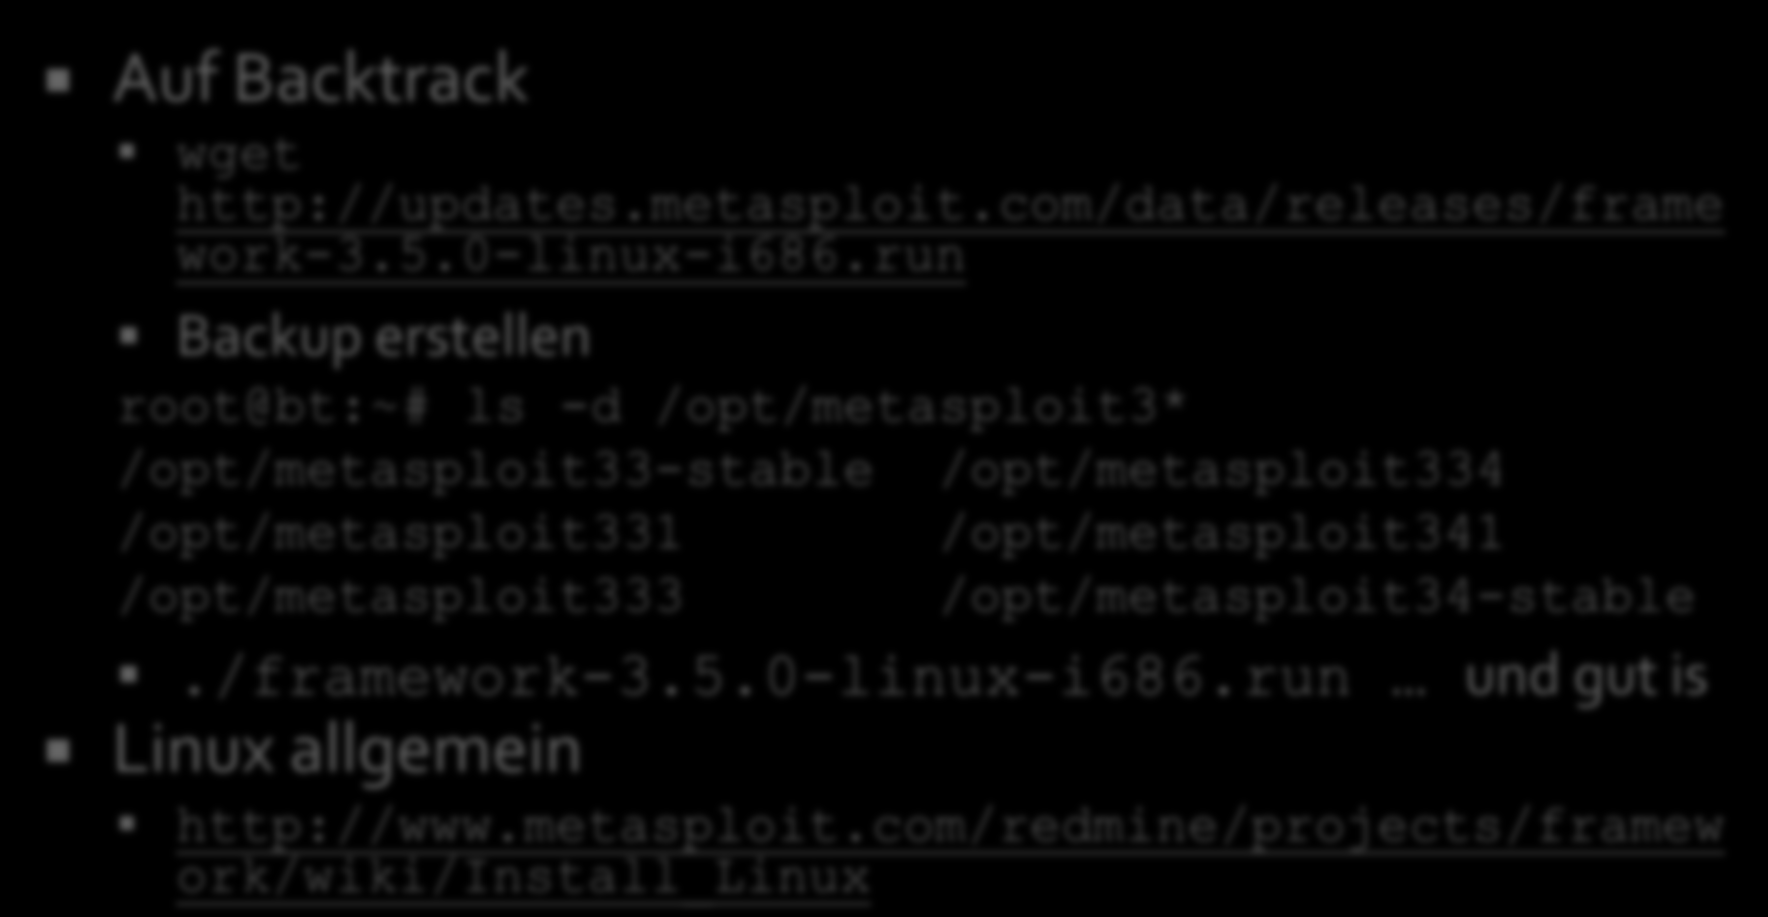 << Install << Auf Backtrack wget http://updates.metasploit.com/data/releases/frame work-3.5.0-linux-i686.